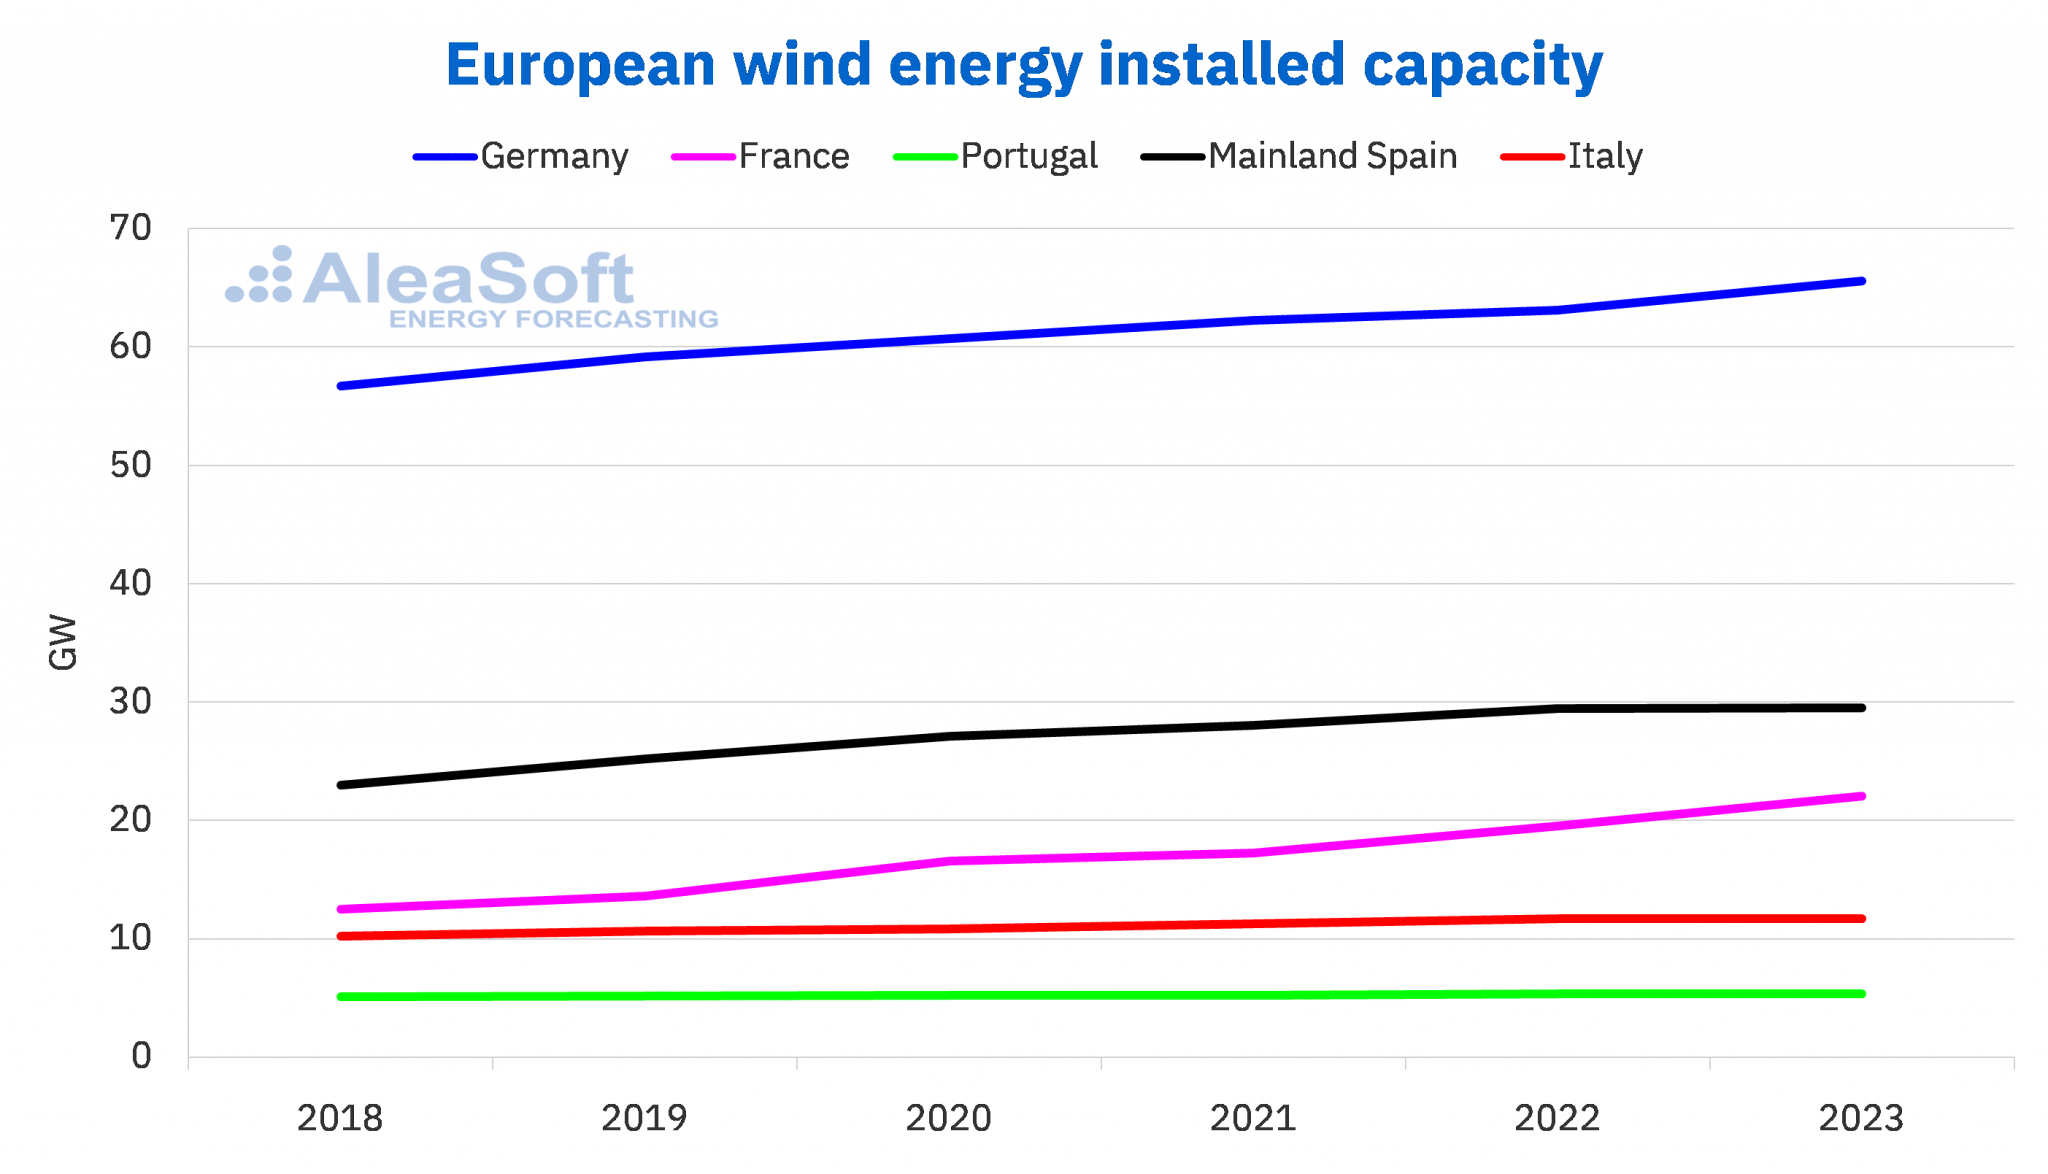 AleaSoft - european wind energy installed capacity